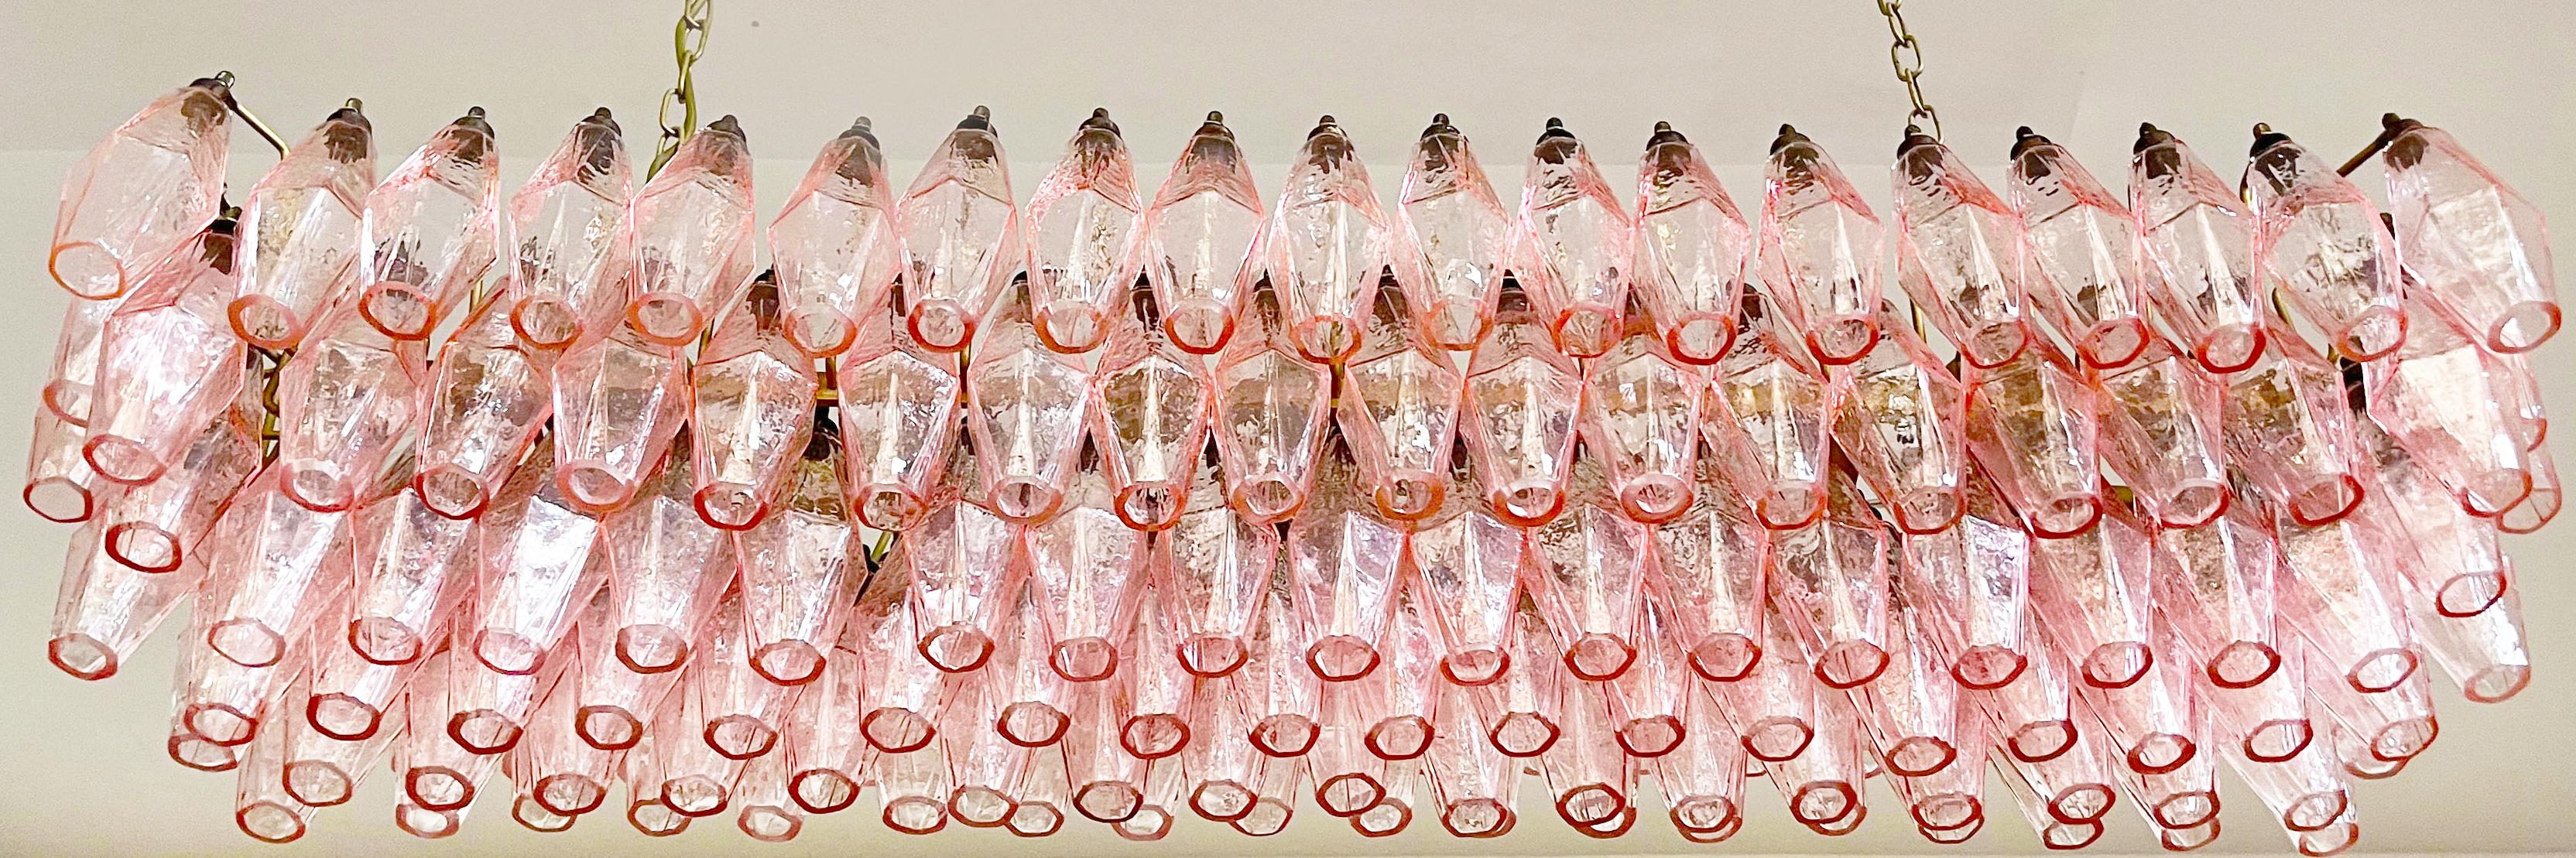 Gorgeous Murano Poliedri Chandelier - Carlo Scarpa Style - 138 pink glasses For Sale 3